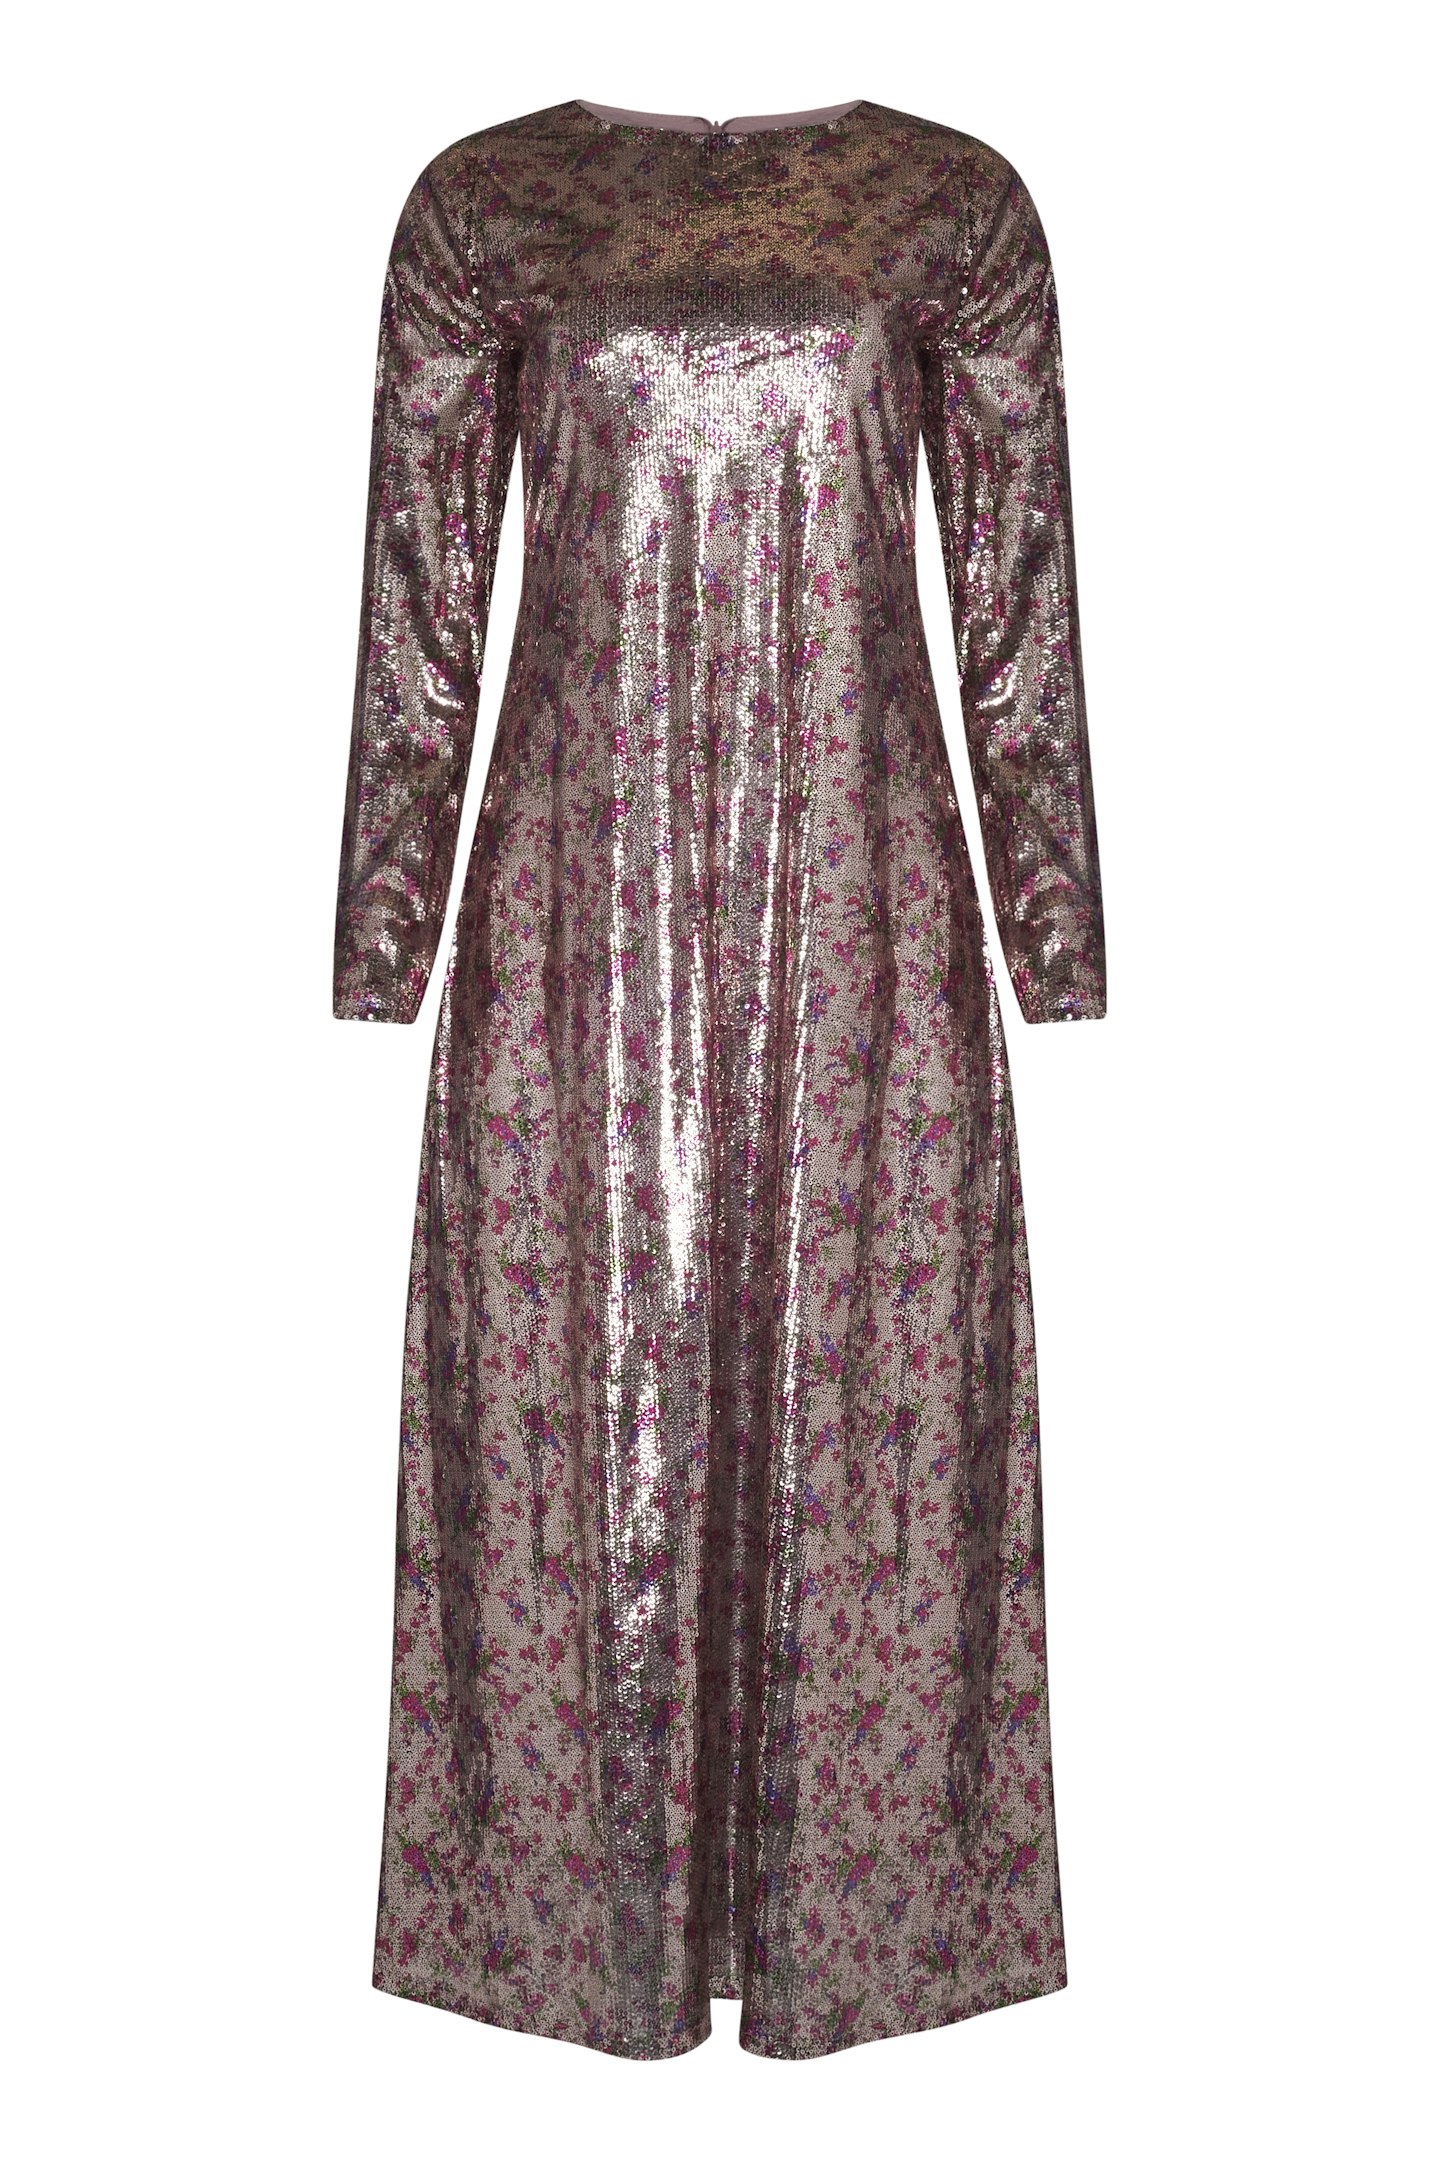 Sister Jane, Solar Sequin Maxi Dress, £98